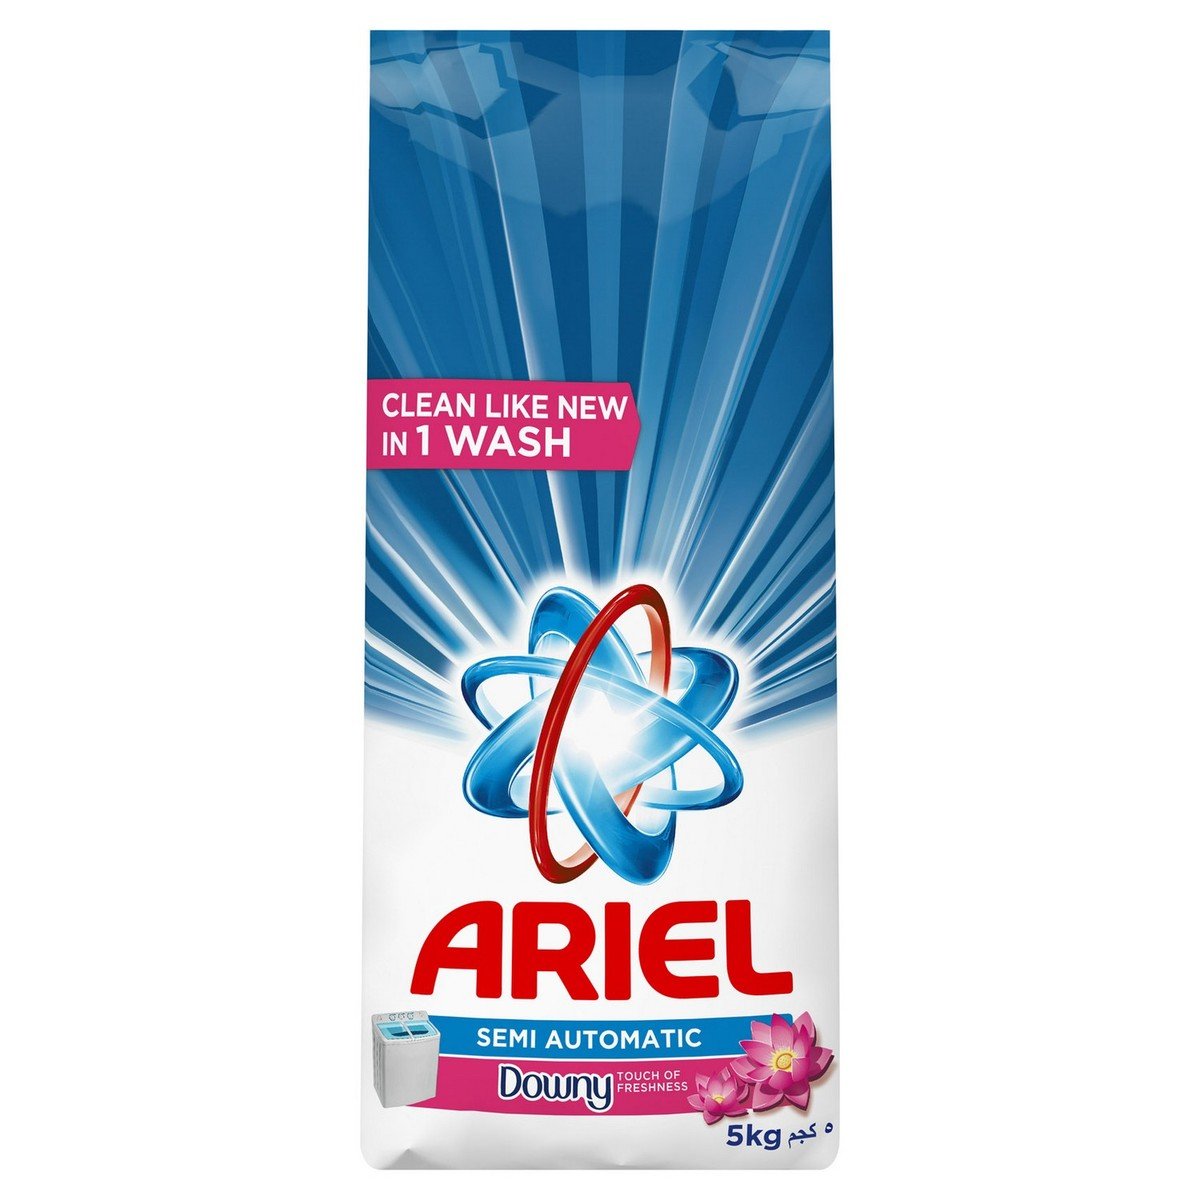 Ariel Laundry Powder Detergent Original Scent Touch of Freshness Downy 5kg